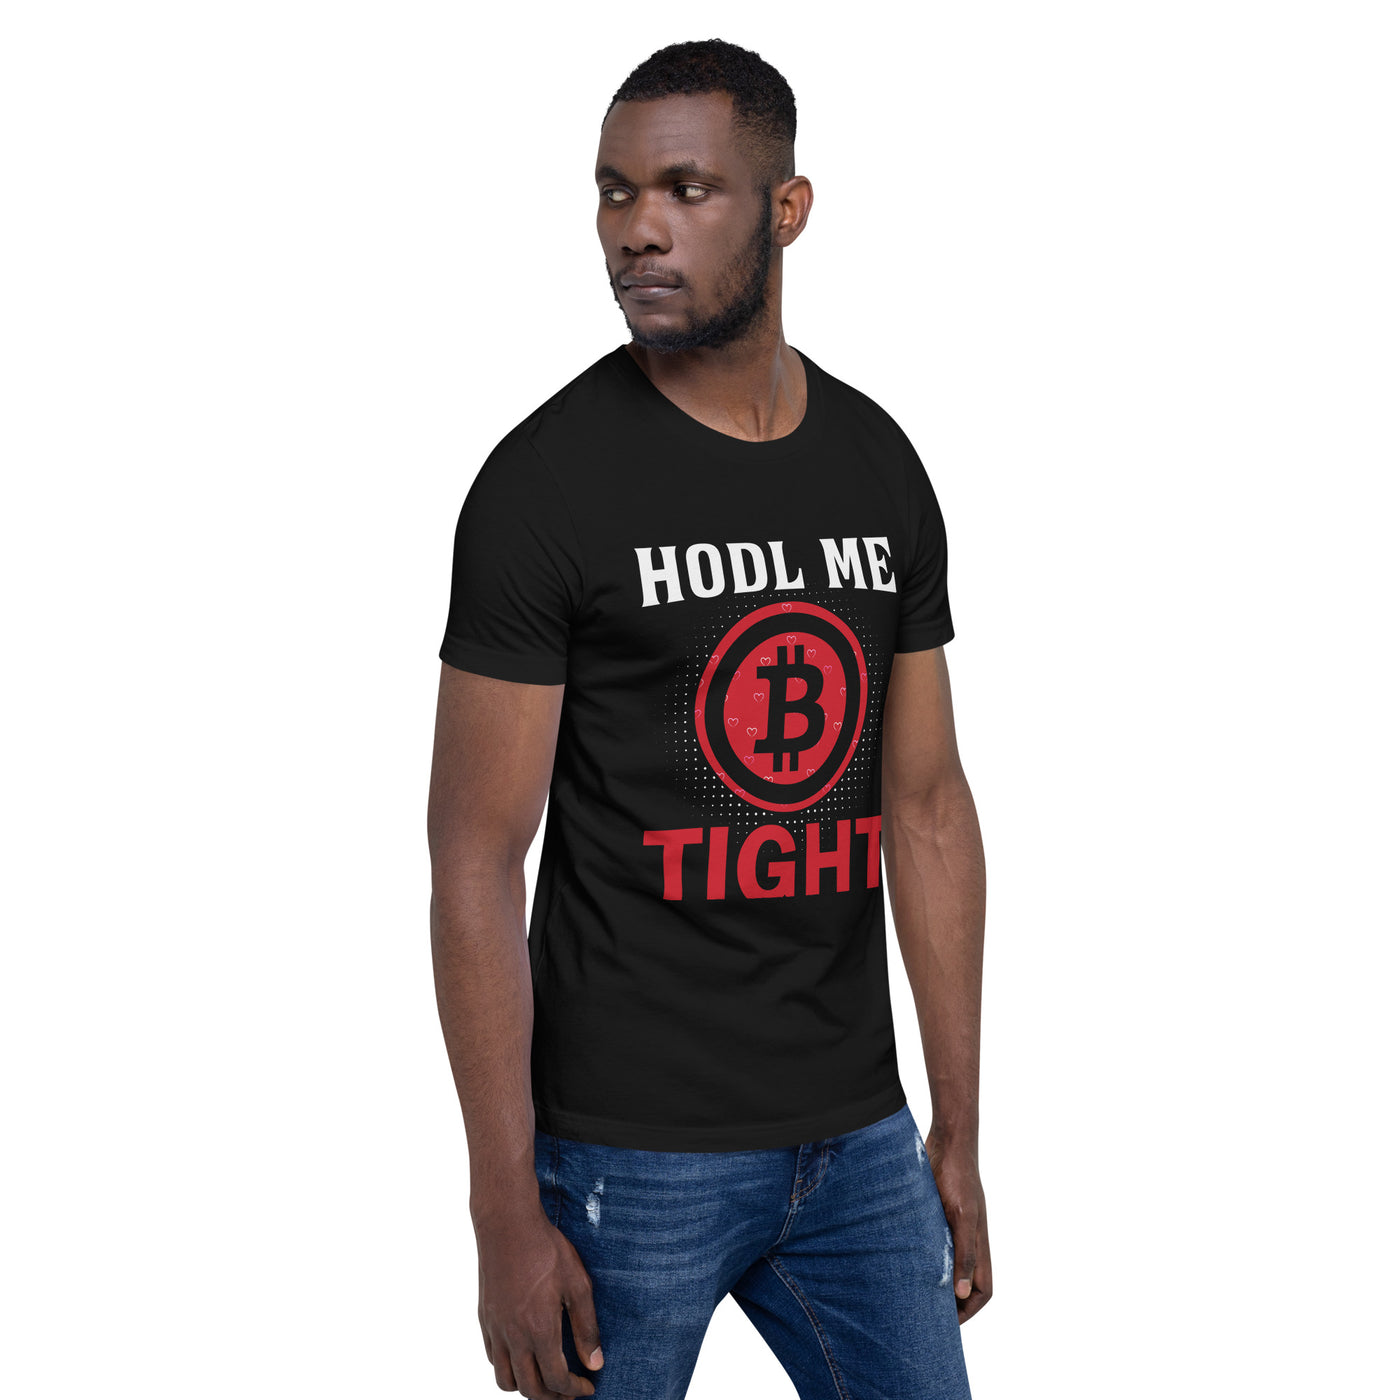 Bitcoin: HODL Me Tight - Unisex t-shirt